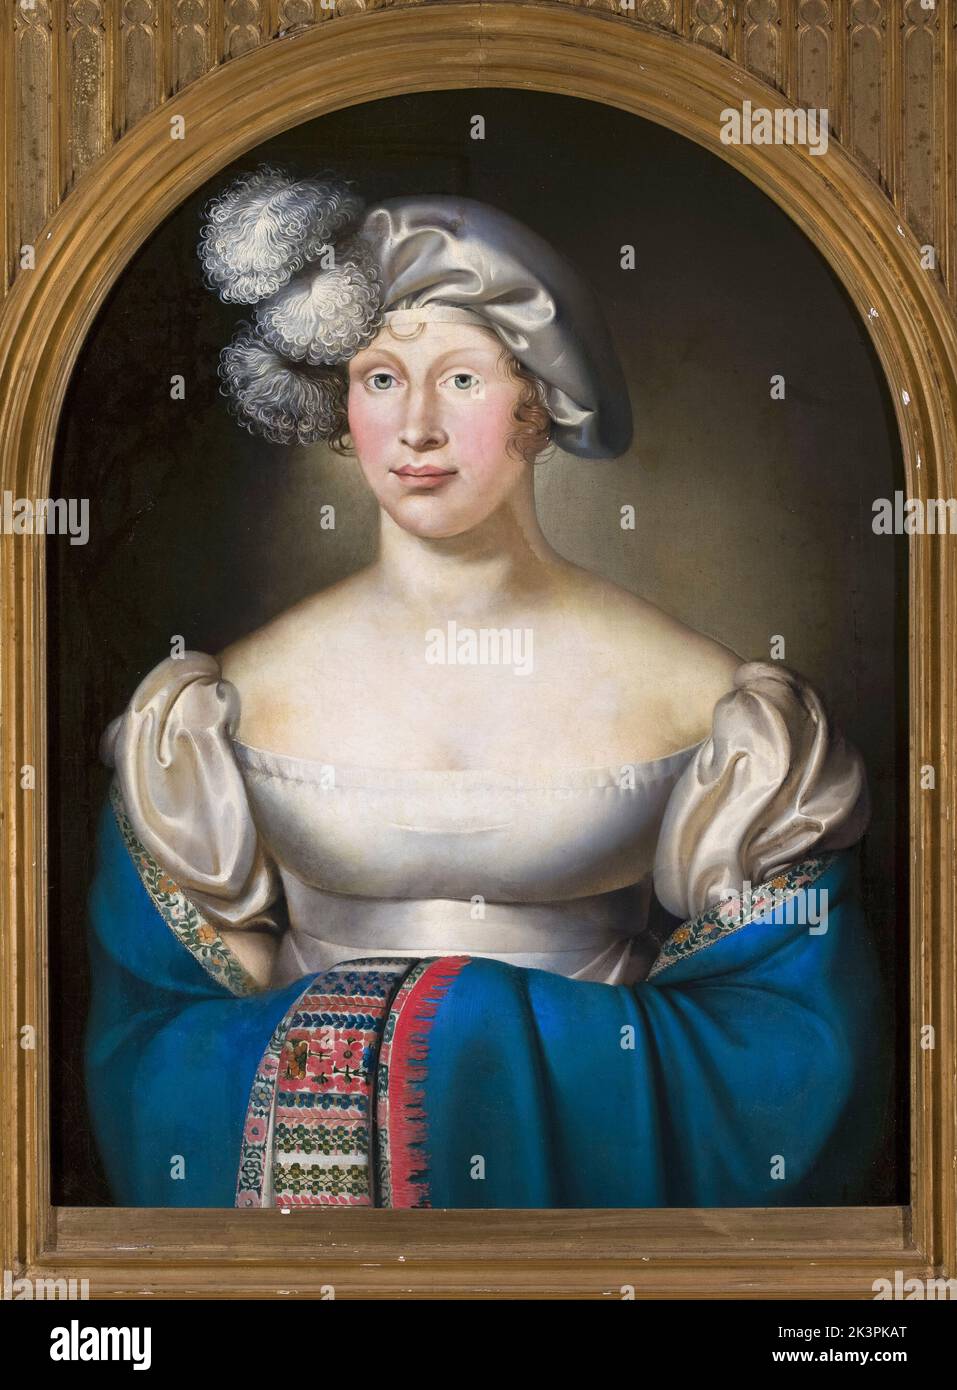 Luisa de Mecklenburg-Strelitz (1776-1810), Reina de Prusia, retrato al óleo sobre lienzo de Wilhelm Ternite, antes de 1871 Foto de stock